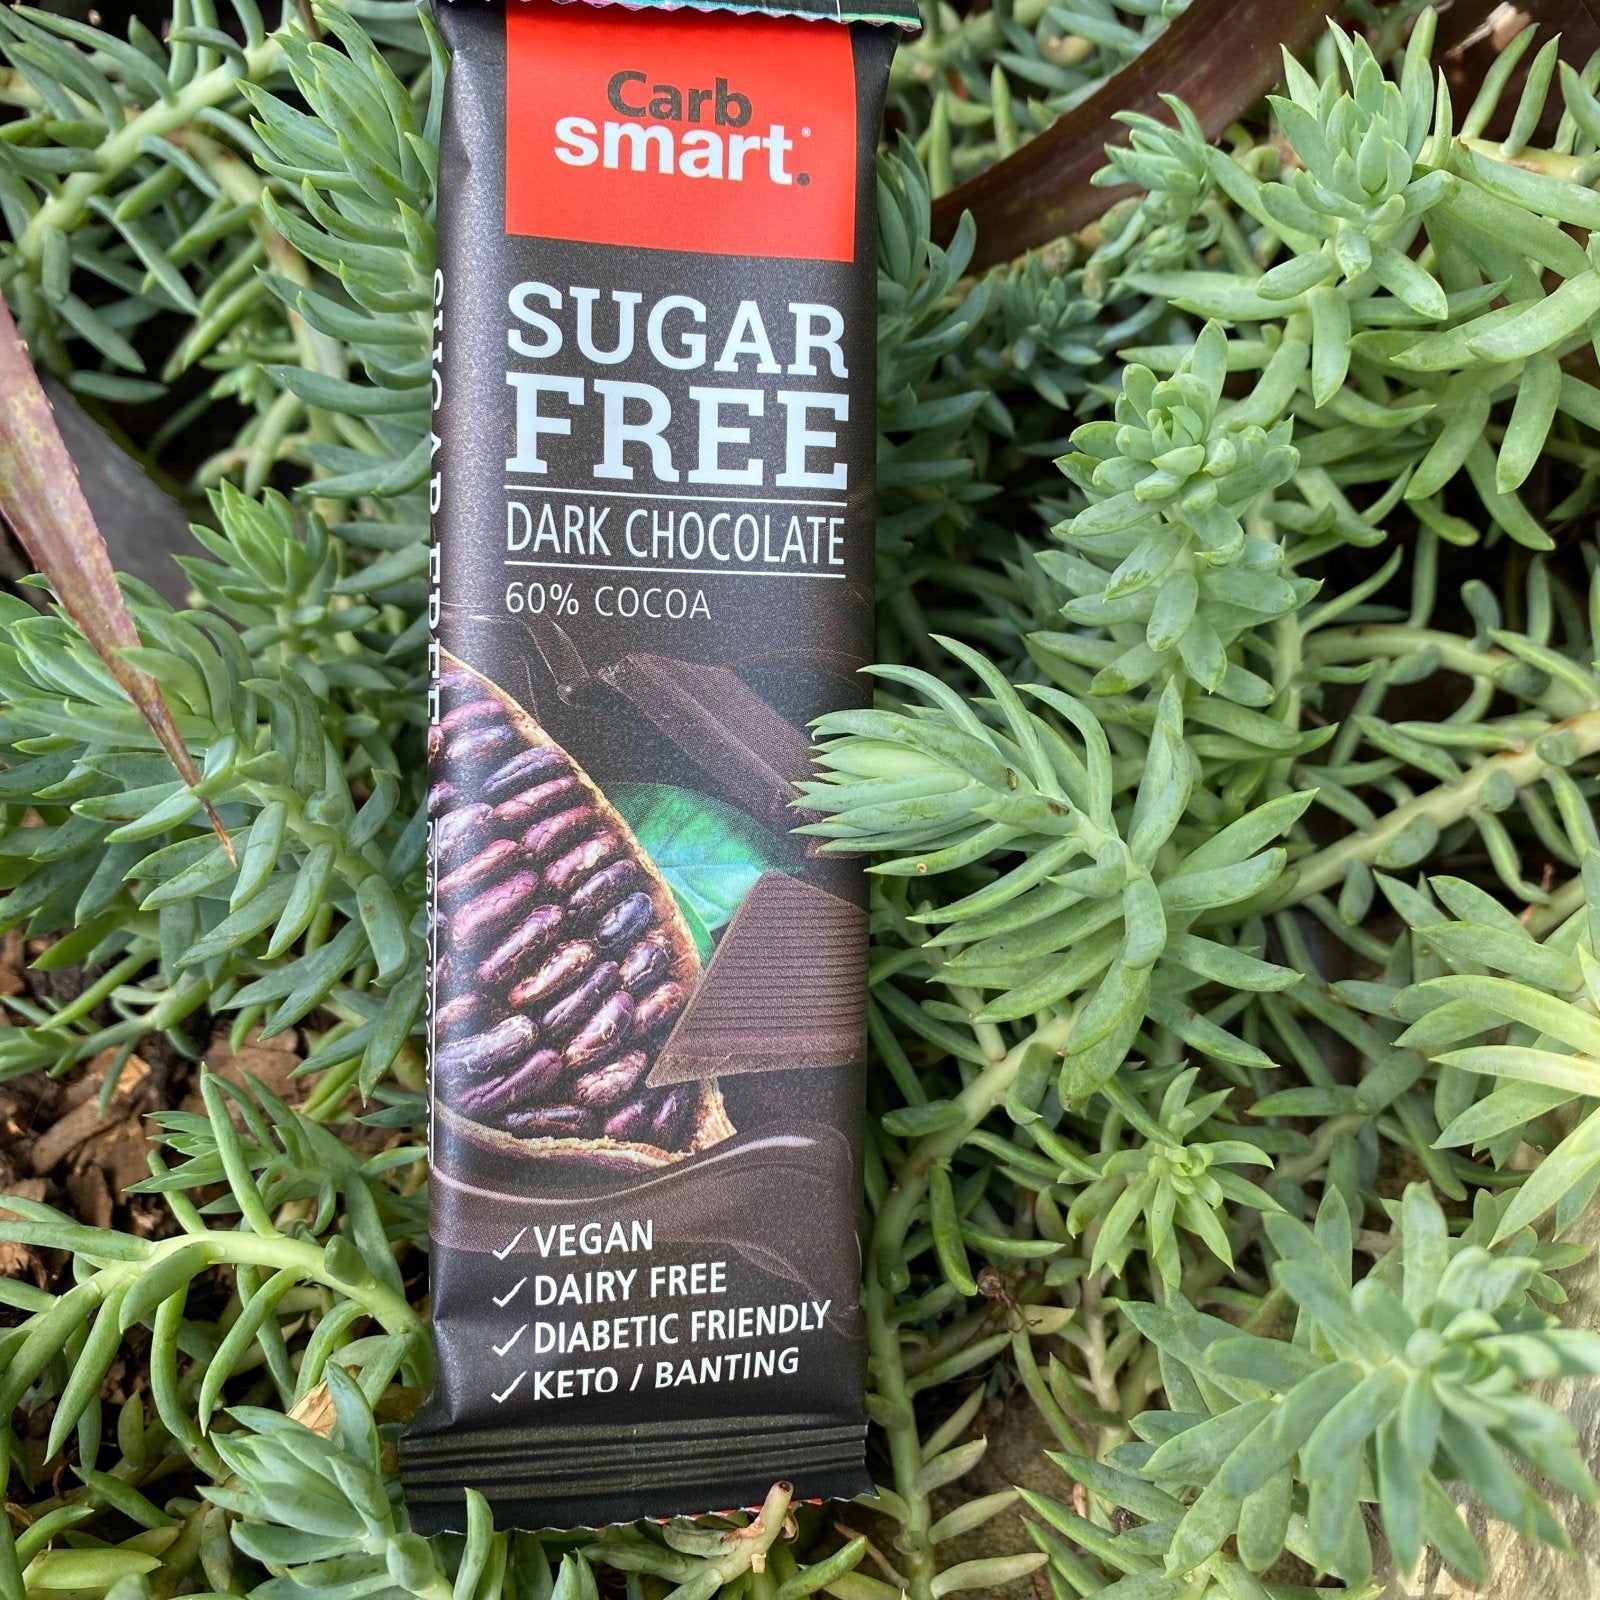 Carb Smart Sugar-Free Dark Chocolate (30g) - The Deli